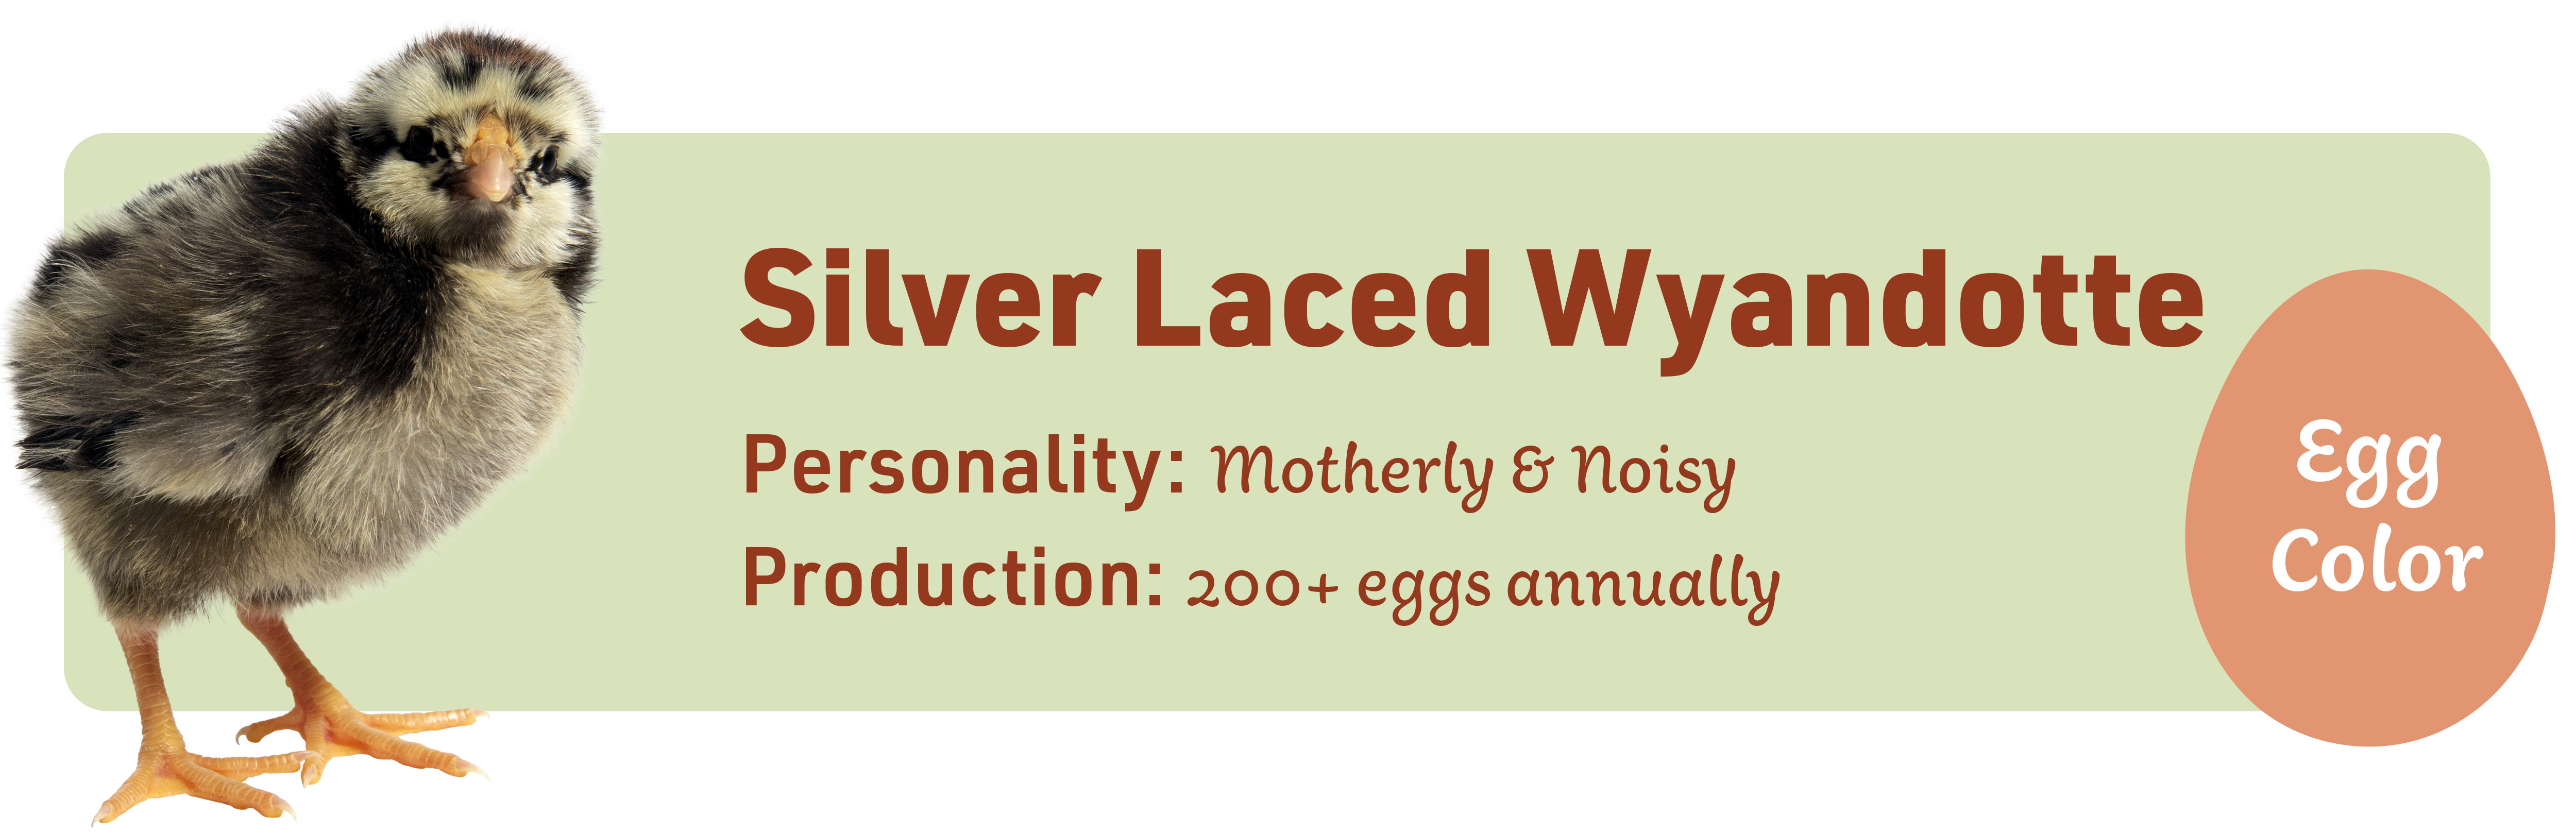 Silver Laced Wyandotte_Popular_chicks_v1-1